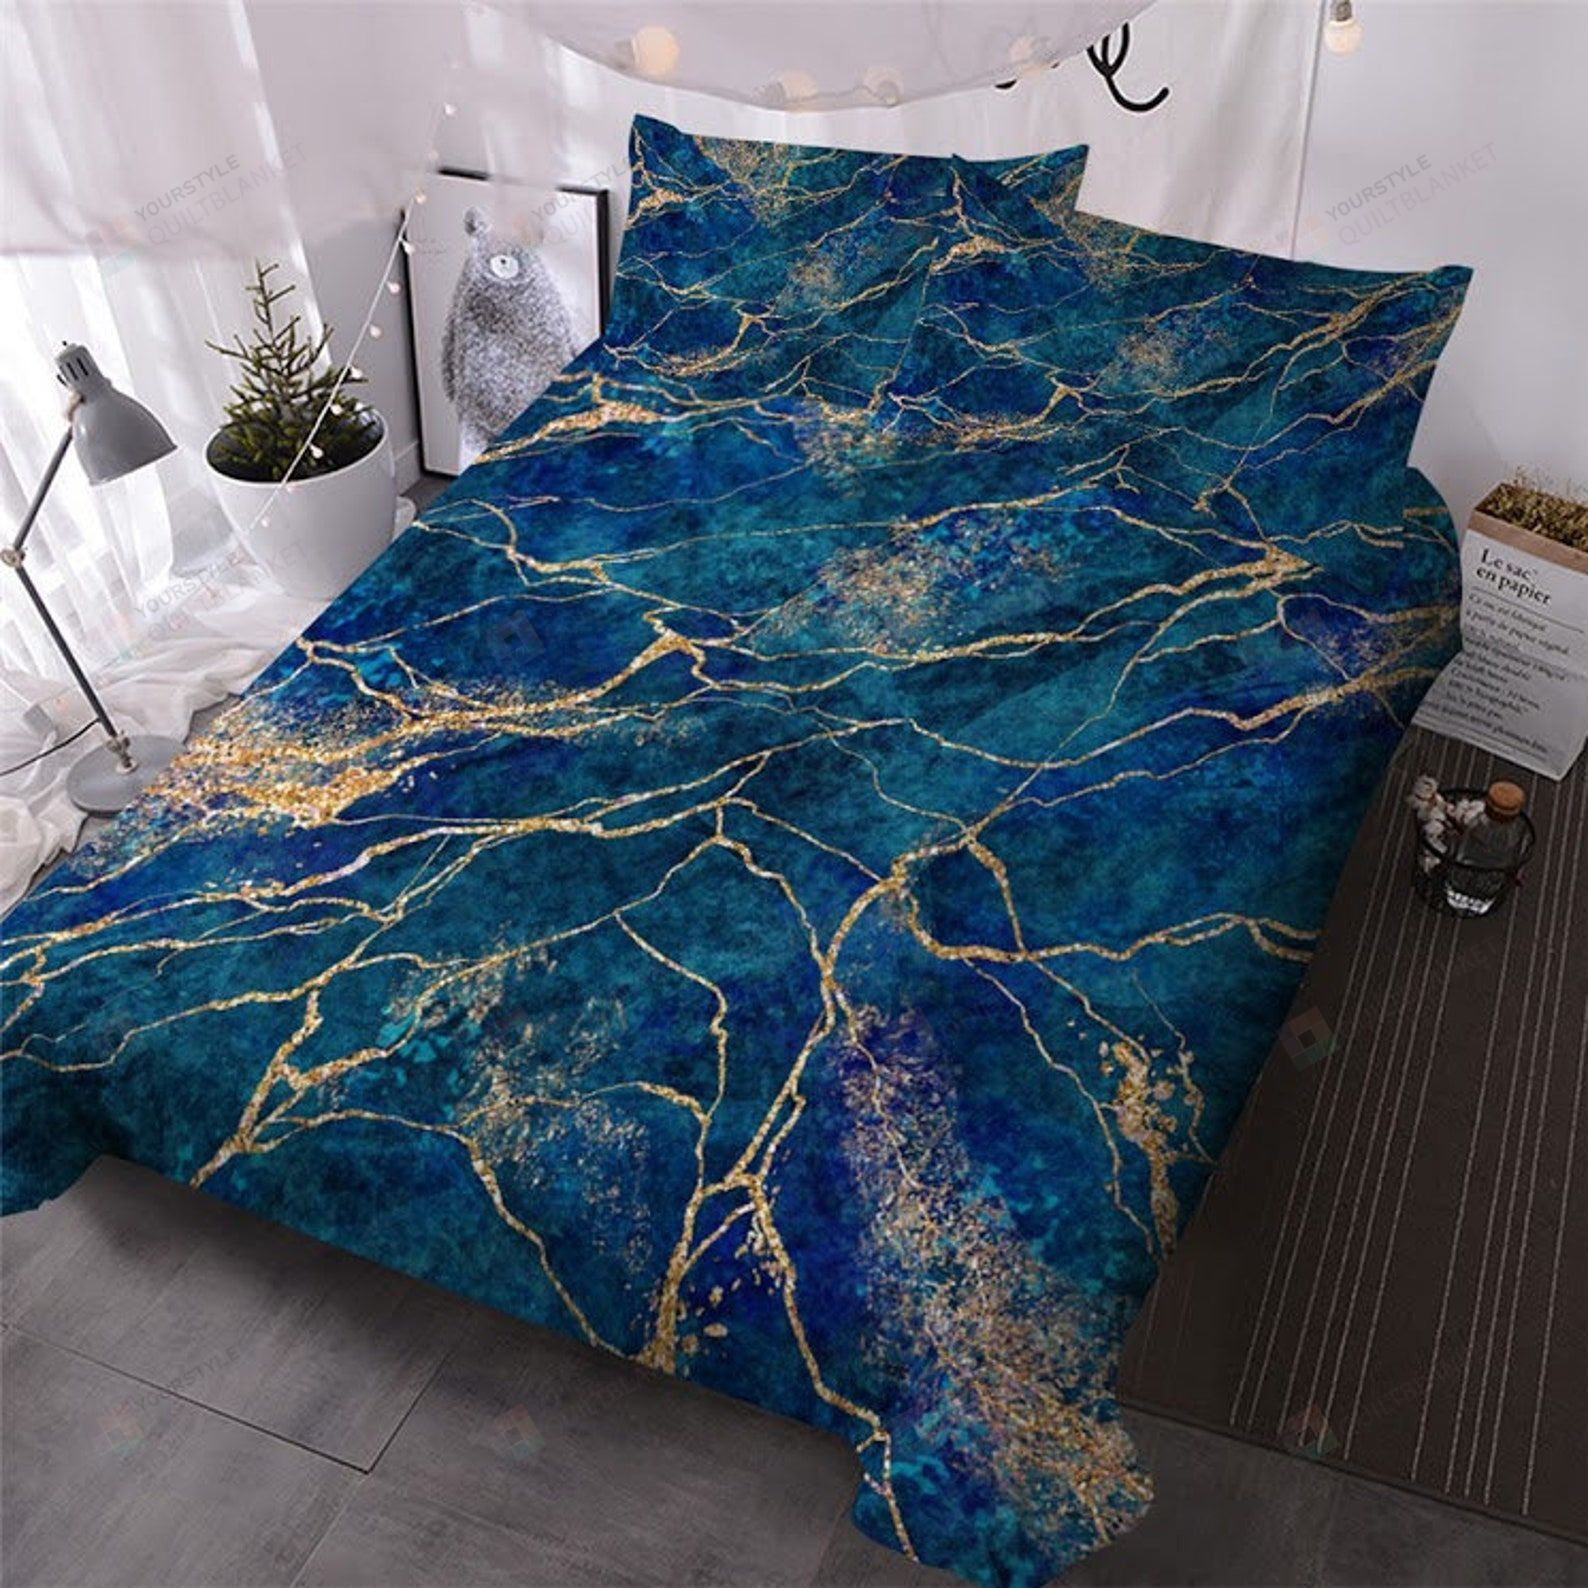 Marble Duvet Gold Ocean Blue Cotton Bed Sheets Spread Comforter Duvet Cover Bedding Sets